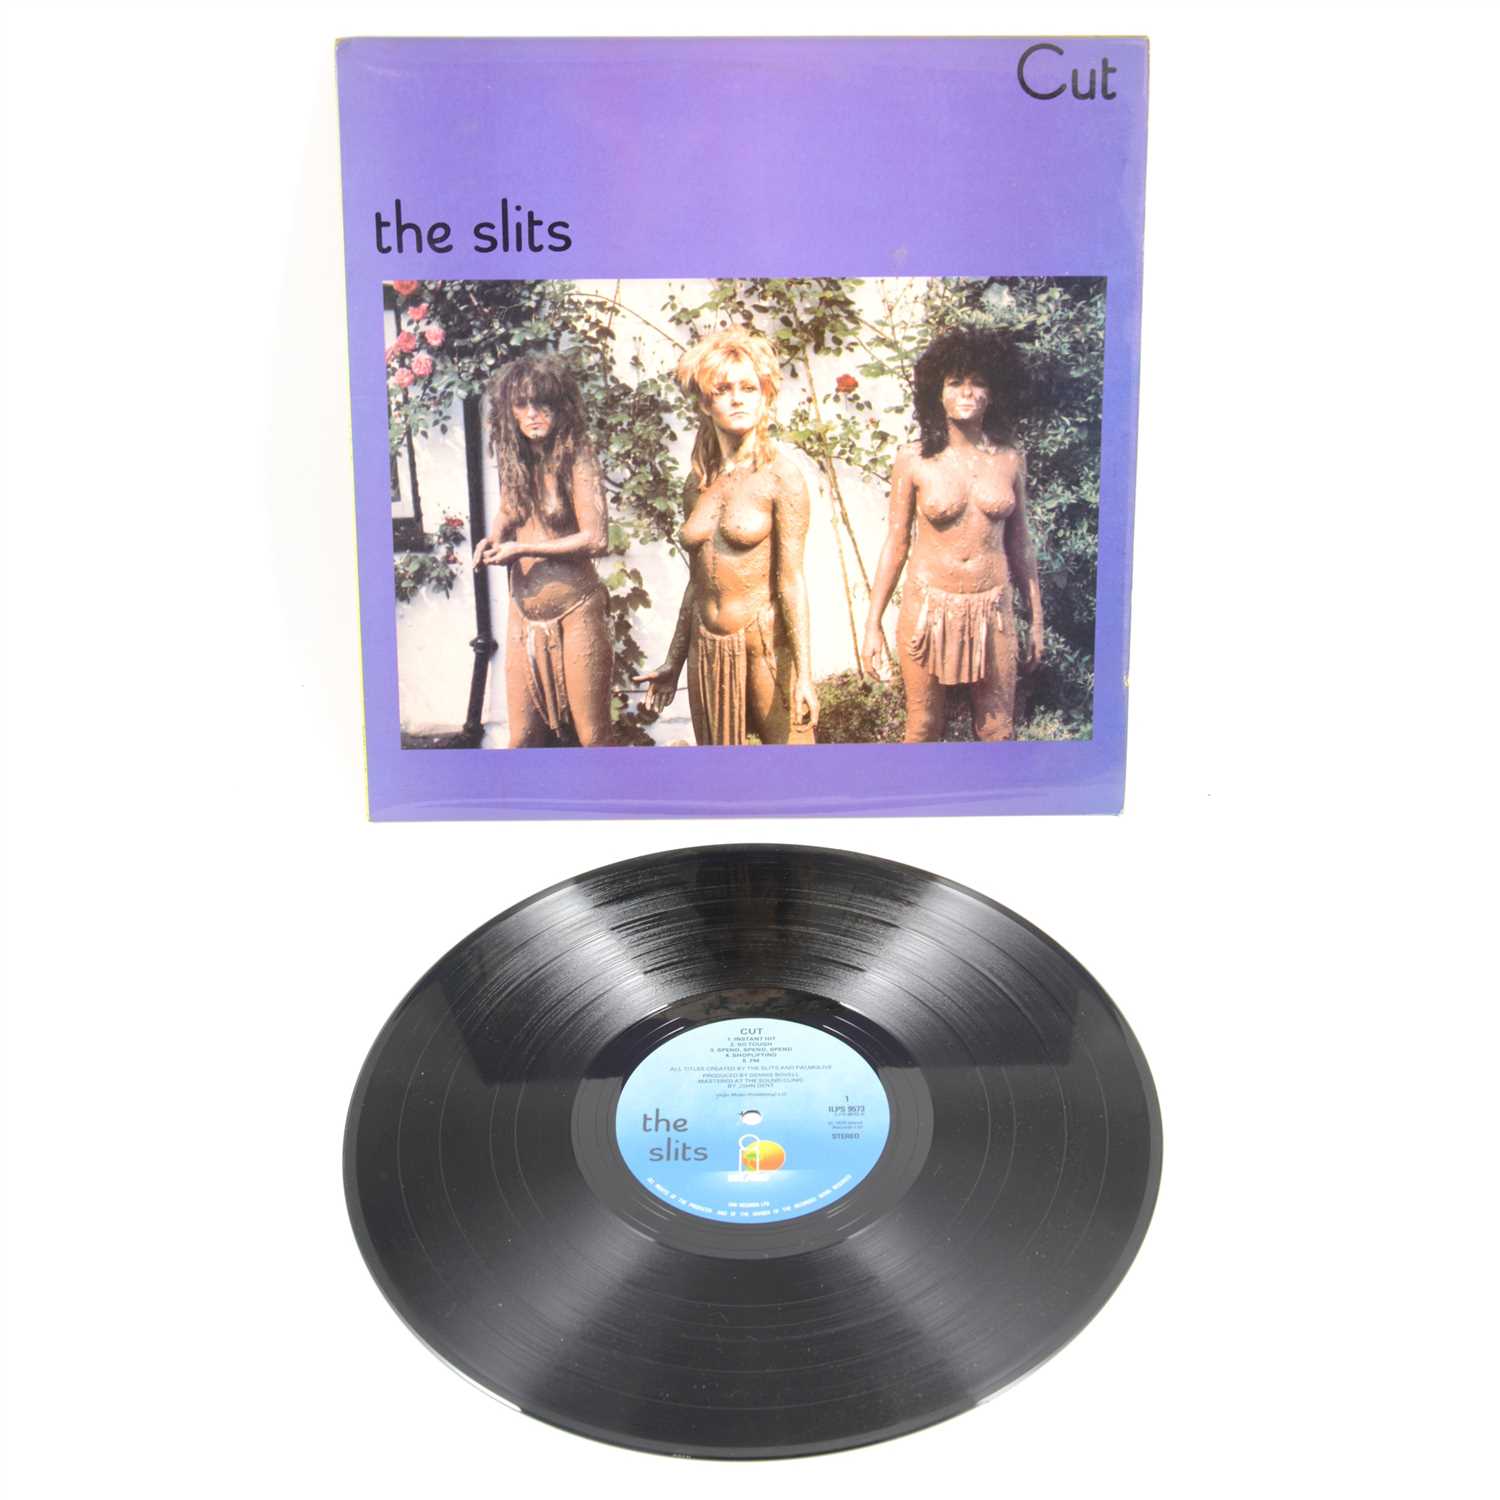 Lot 677 - The Slits; Cut music LP vinyl record